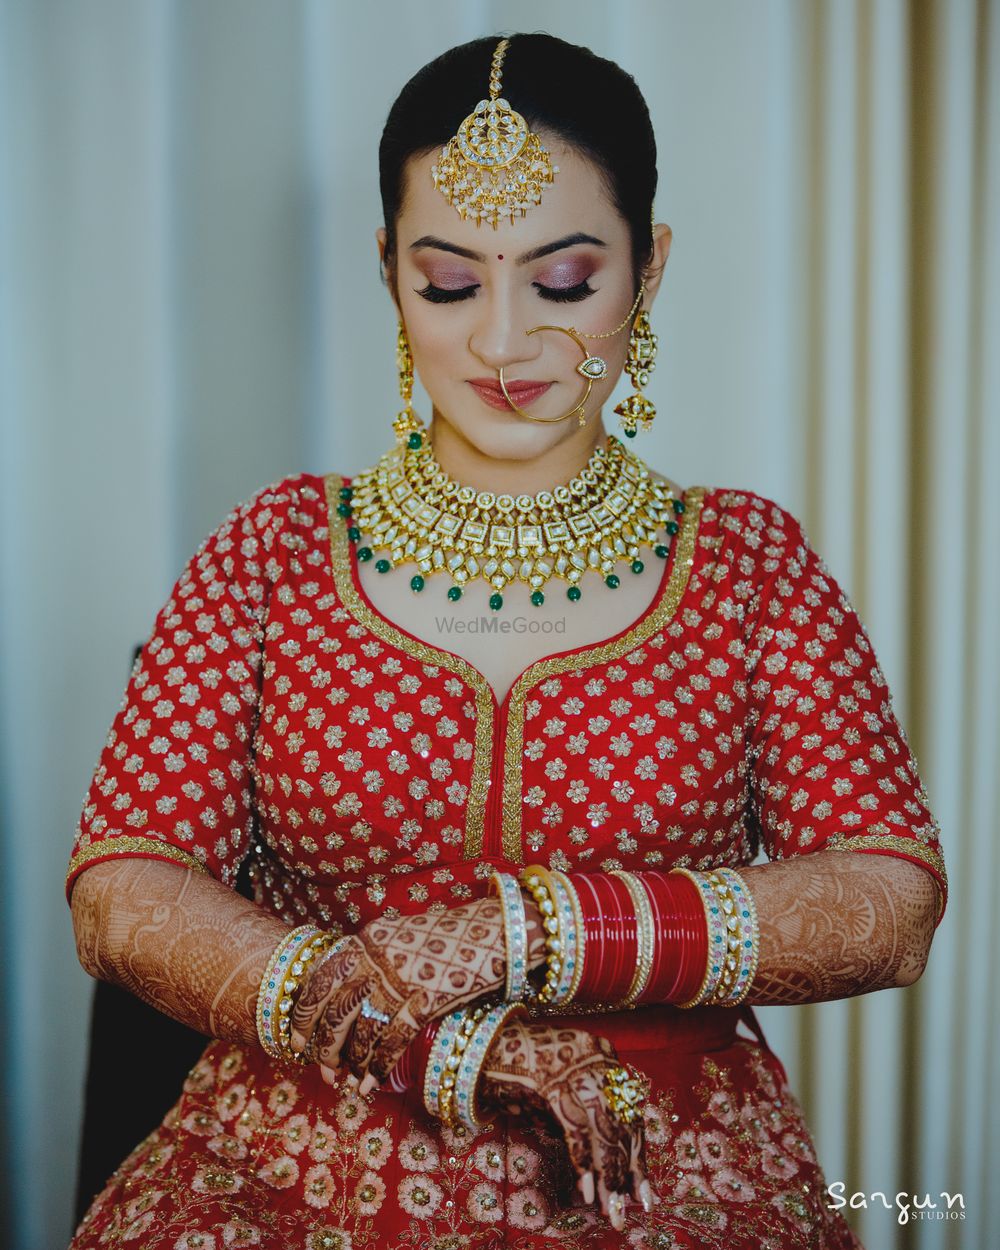 Photo From smriti's wedding - By Sargun Studios